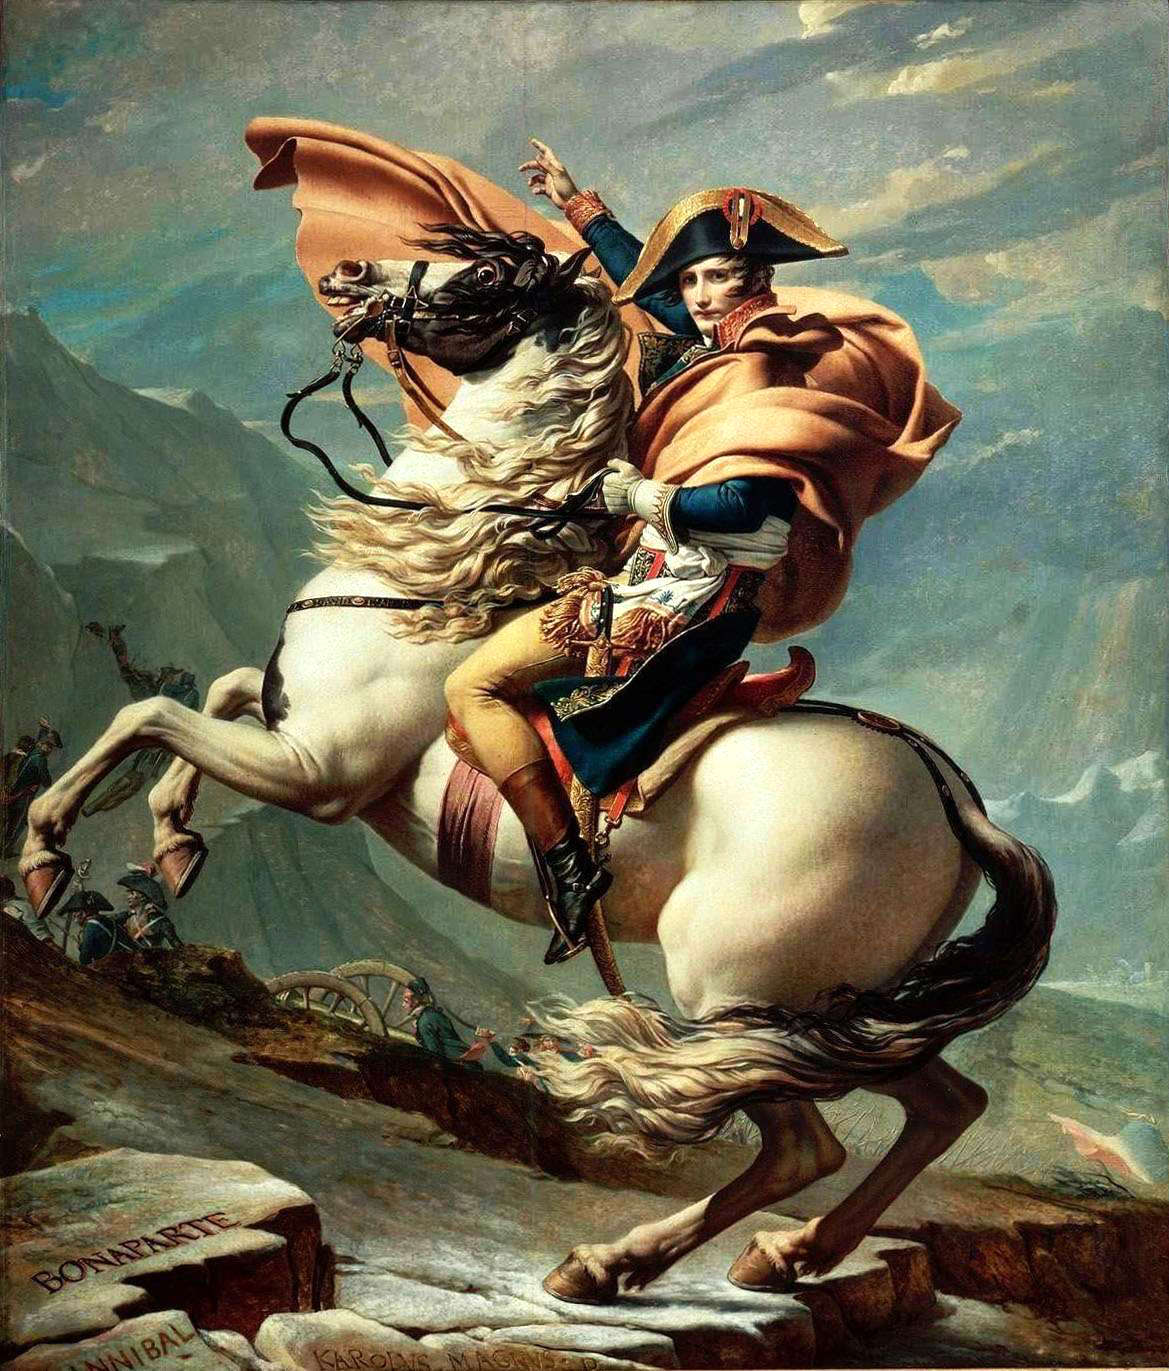 https://upload.wikimedia.org/wikipedia/commons/3/31/David_-_Napoleon_crossing_the_Alps_-_Malmaison1.jpg